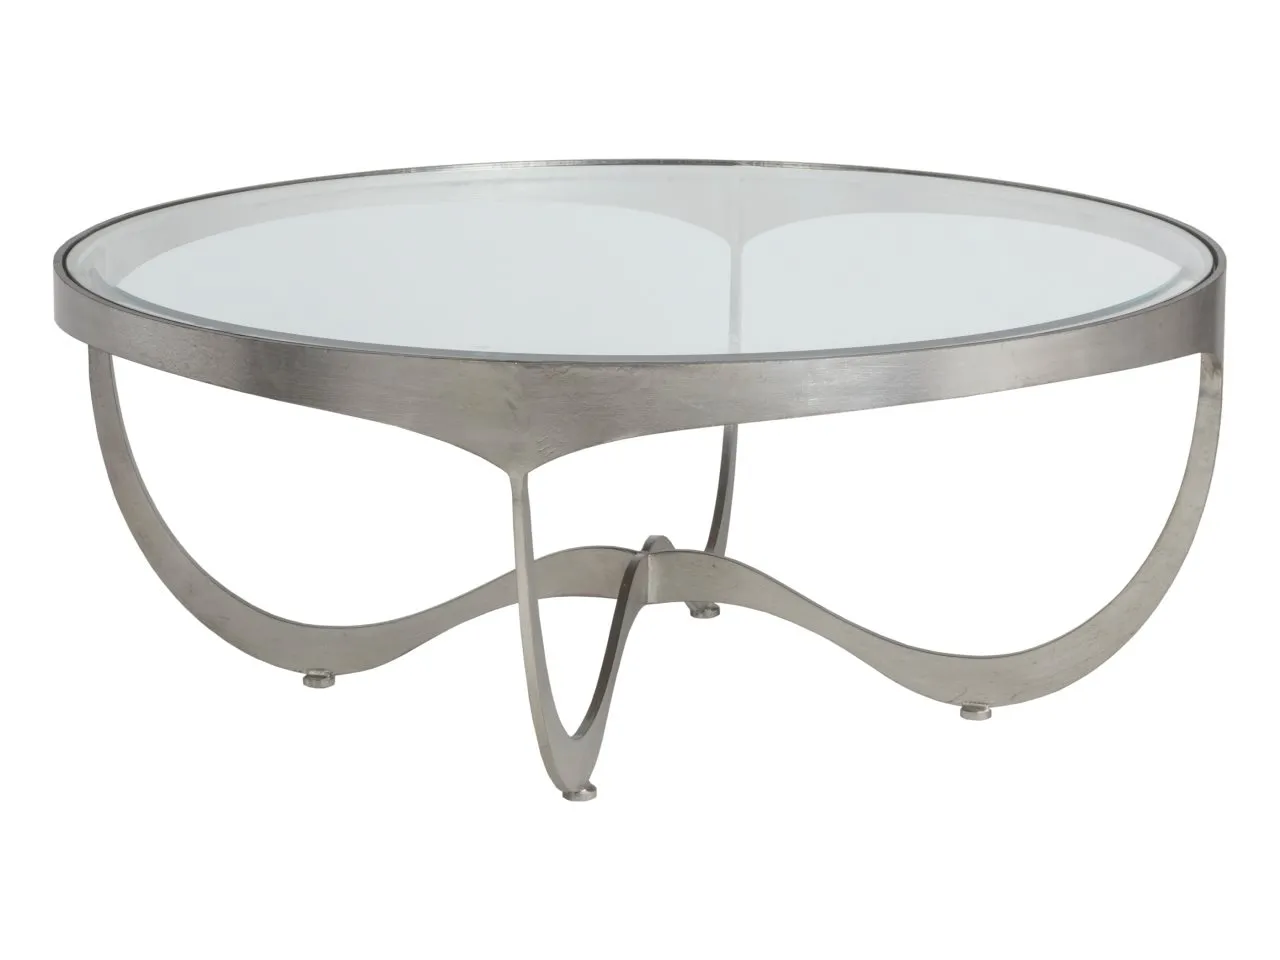 SOPHIE ROUND COCKTAIL TABLE METAL DESIGNS